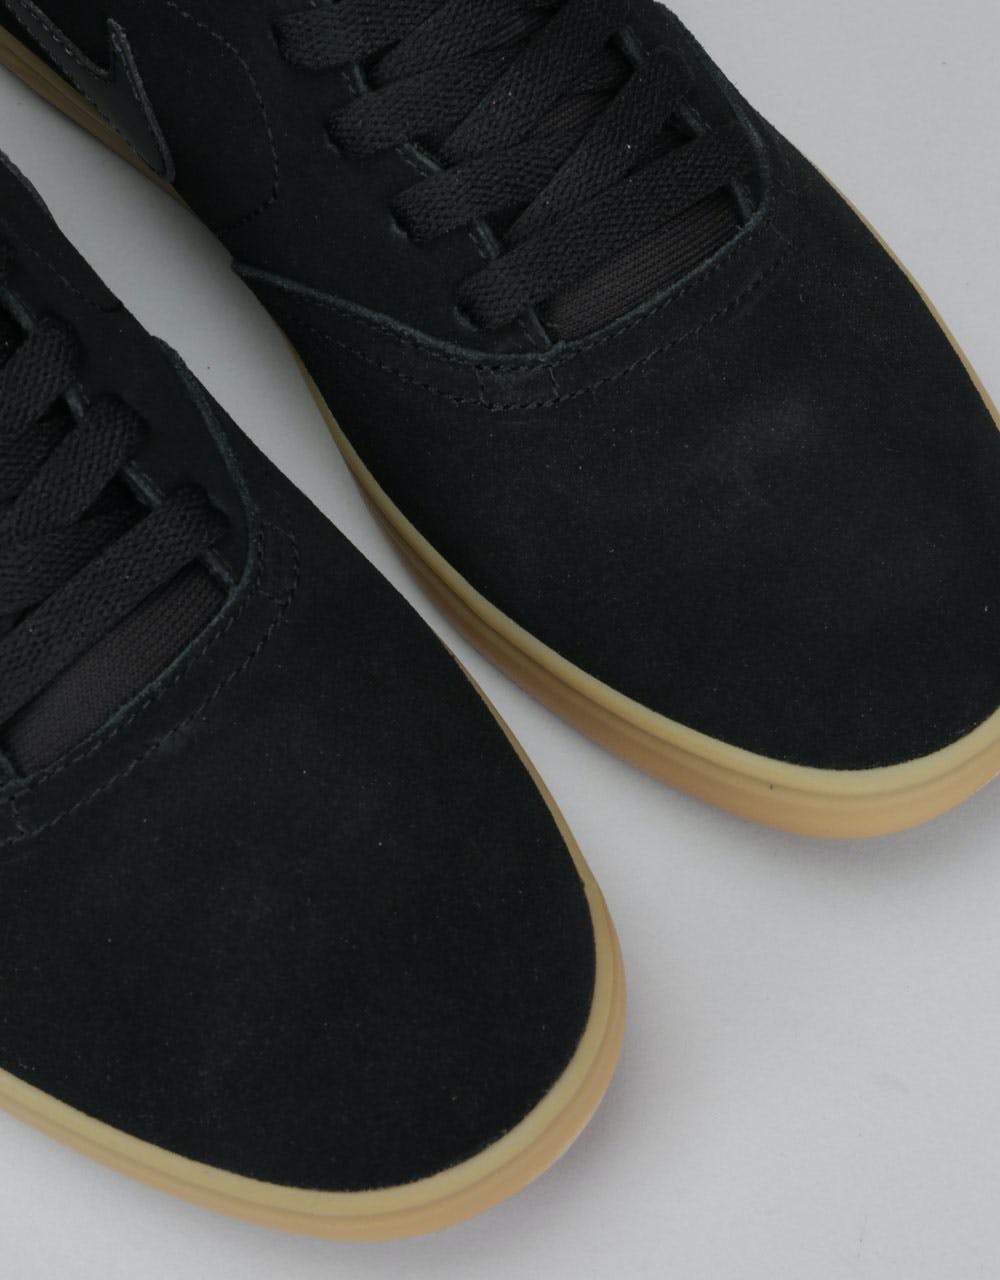 Nike SB Check Solarsoft Skate Shoes - Black/Anthracite -Gum Dark Brown